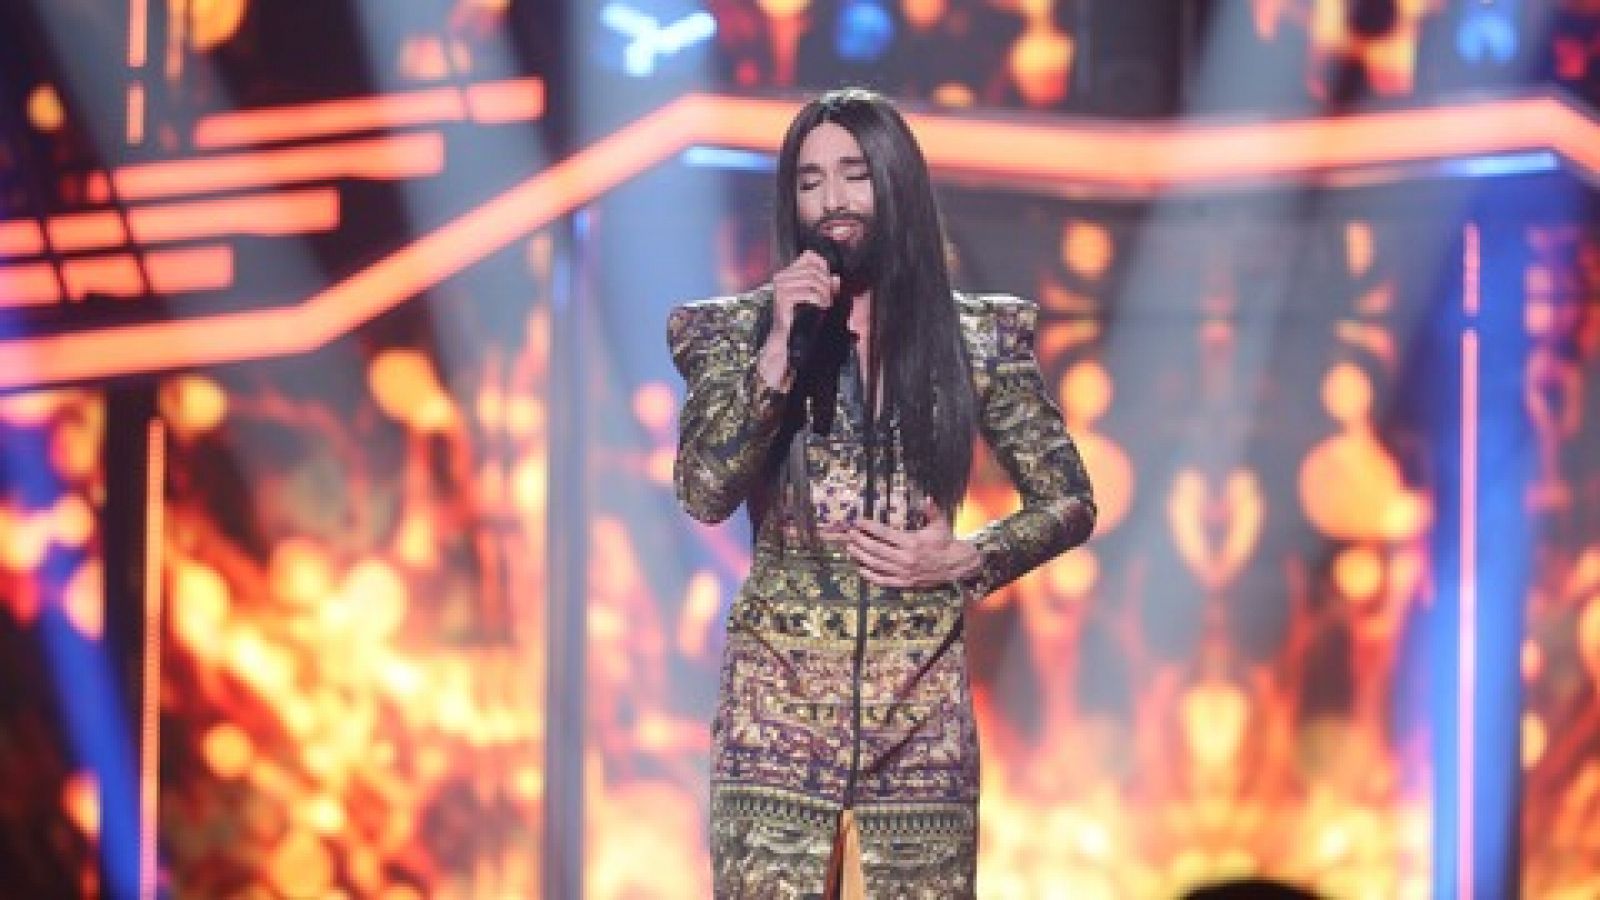 Operación Triunfo - Conchita Wurst canta 'Rise like a phoenix' en la Gala Eurovisión de OT